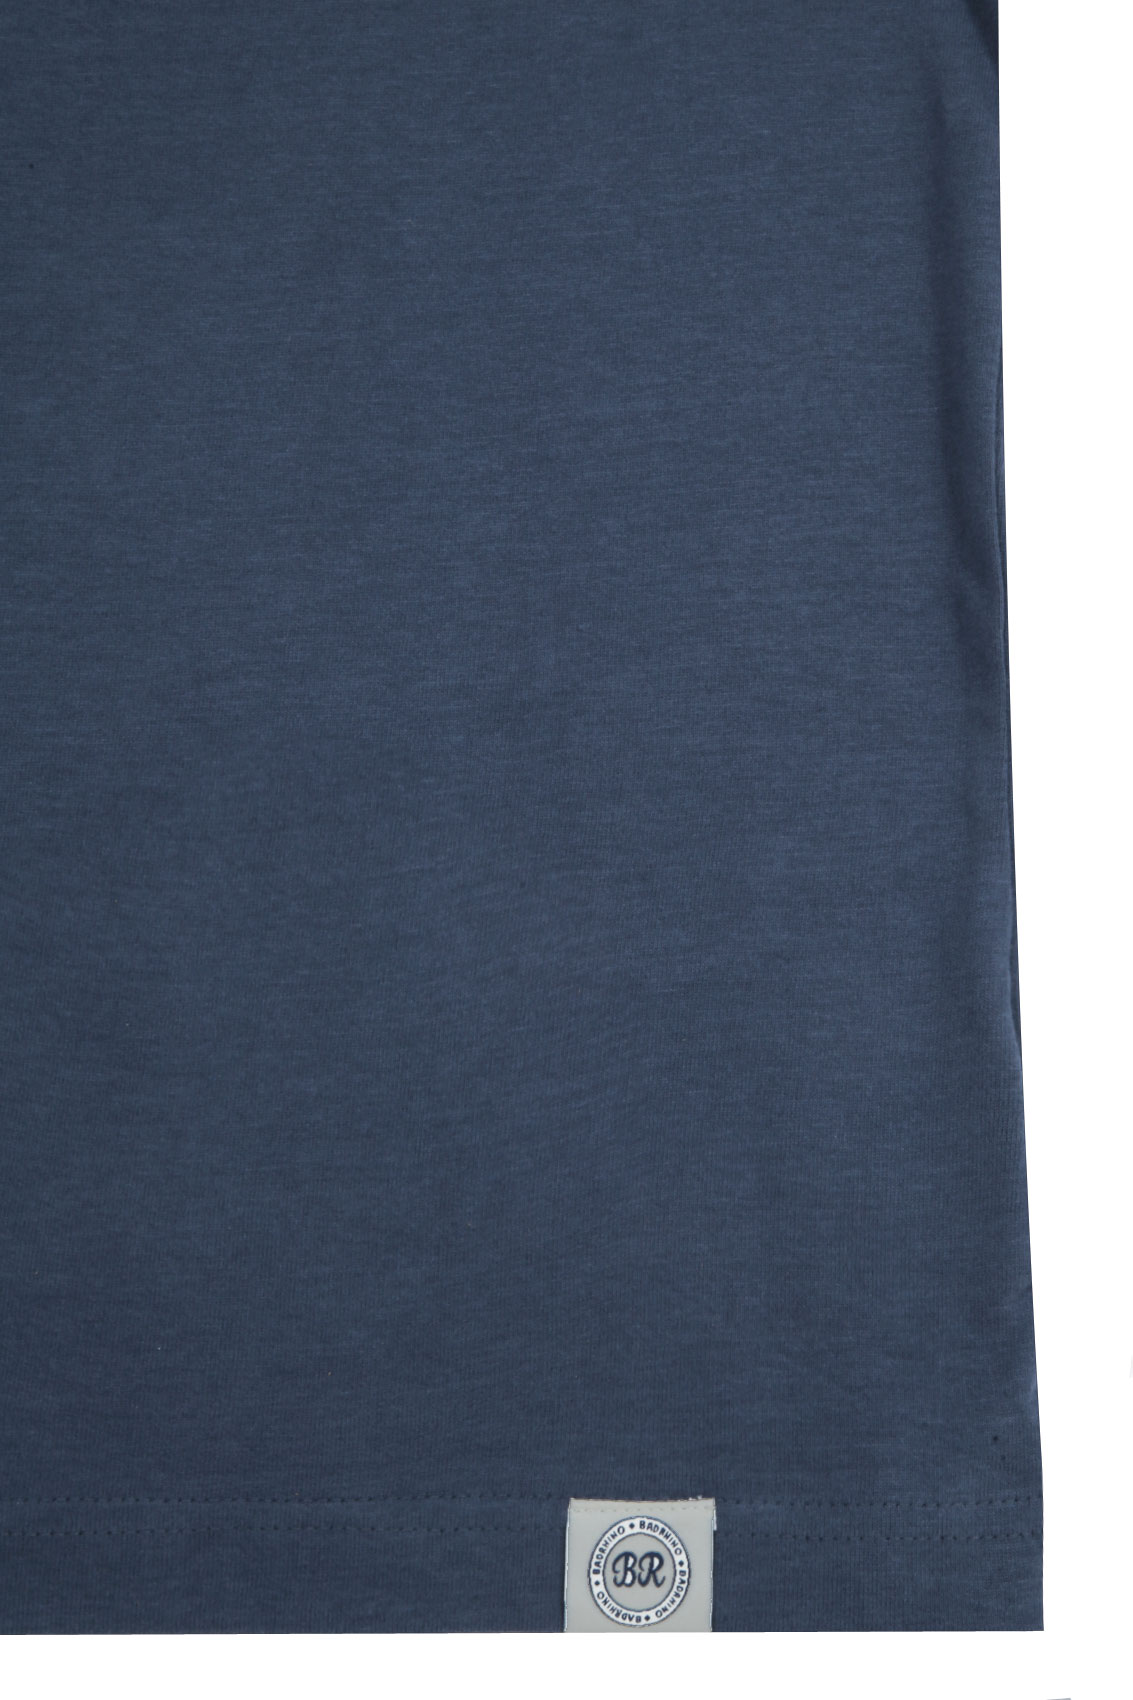 BadRhino Denim Blue Short Sleeve Grandad T-Shirt sizes L to 8XL | BadRhino